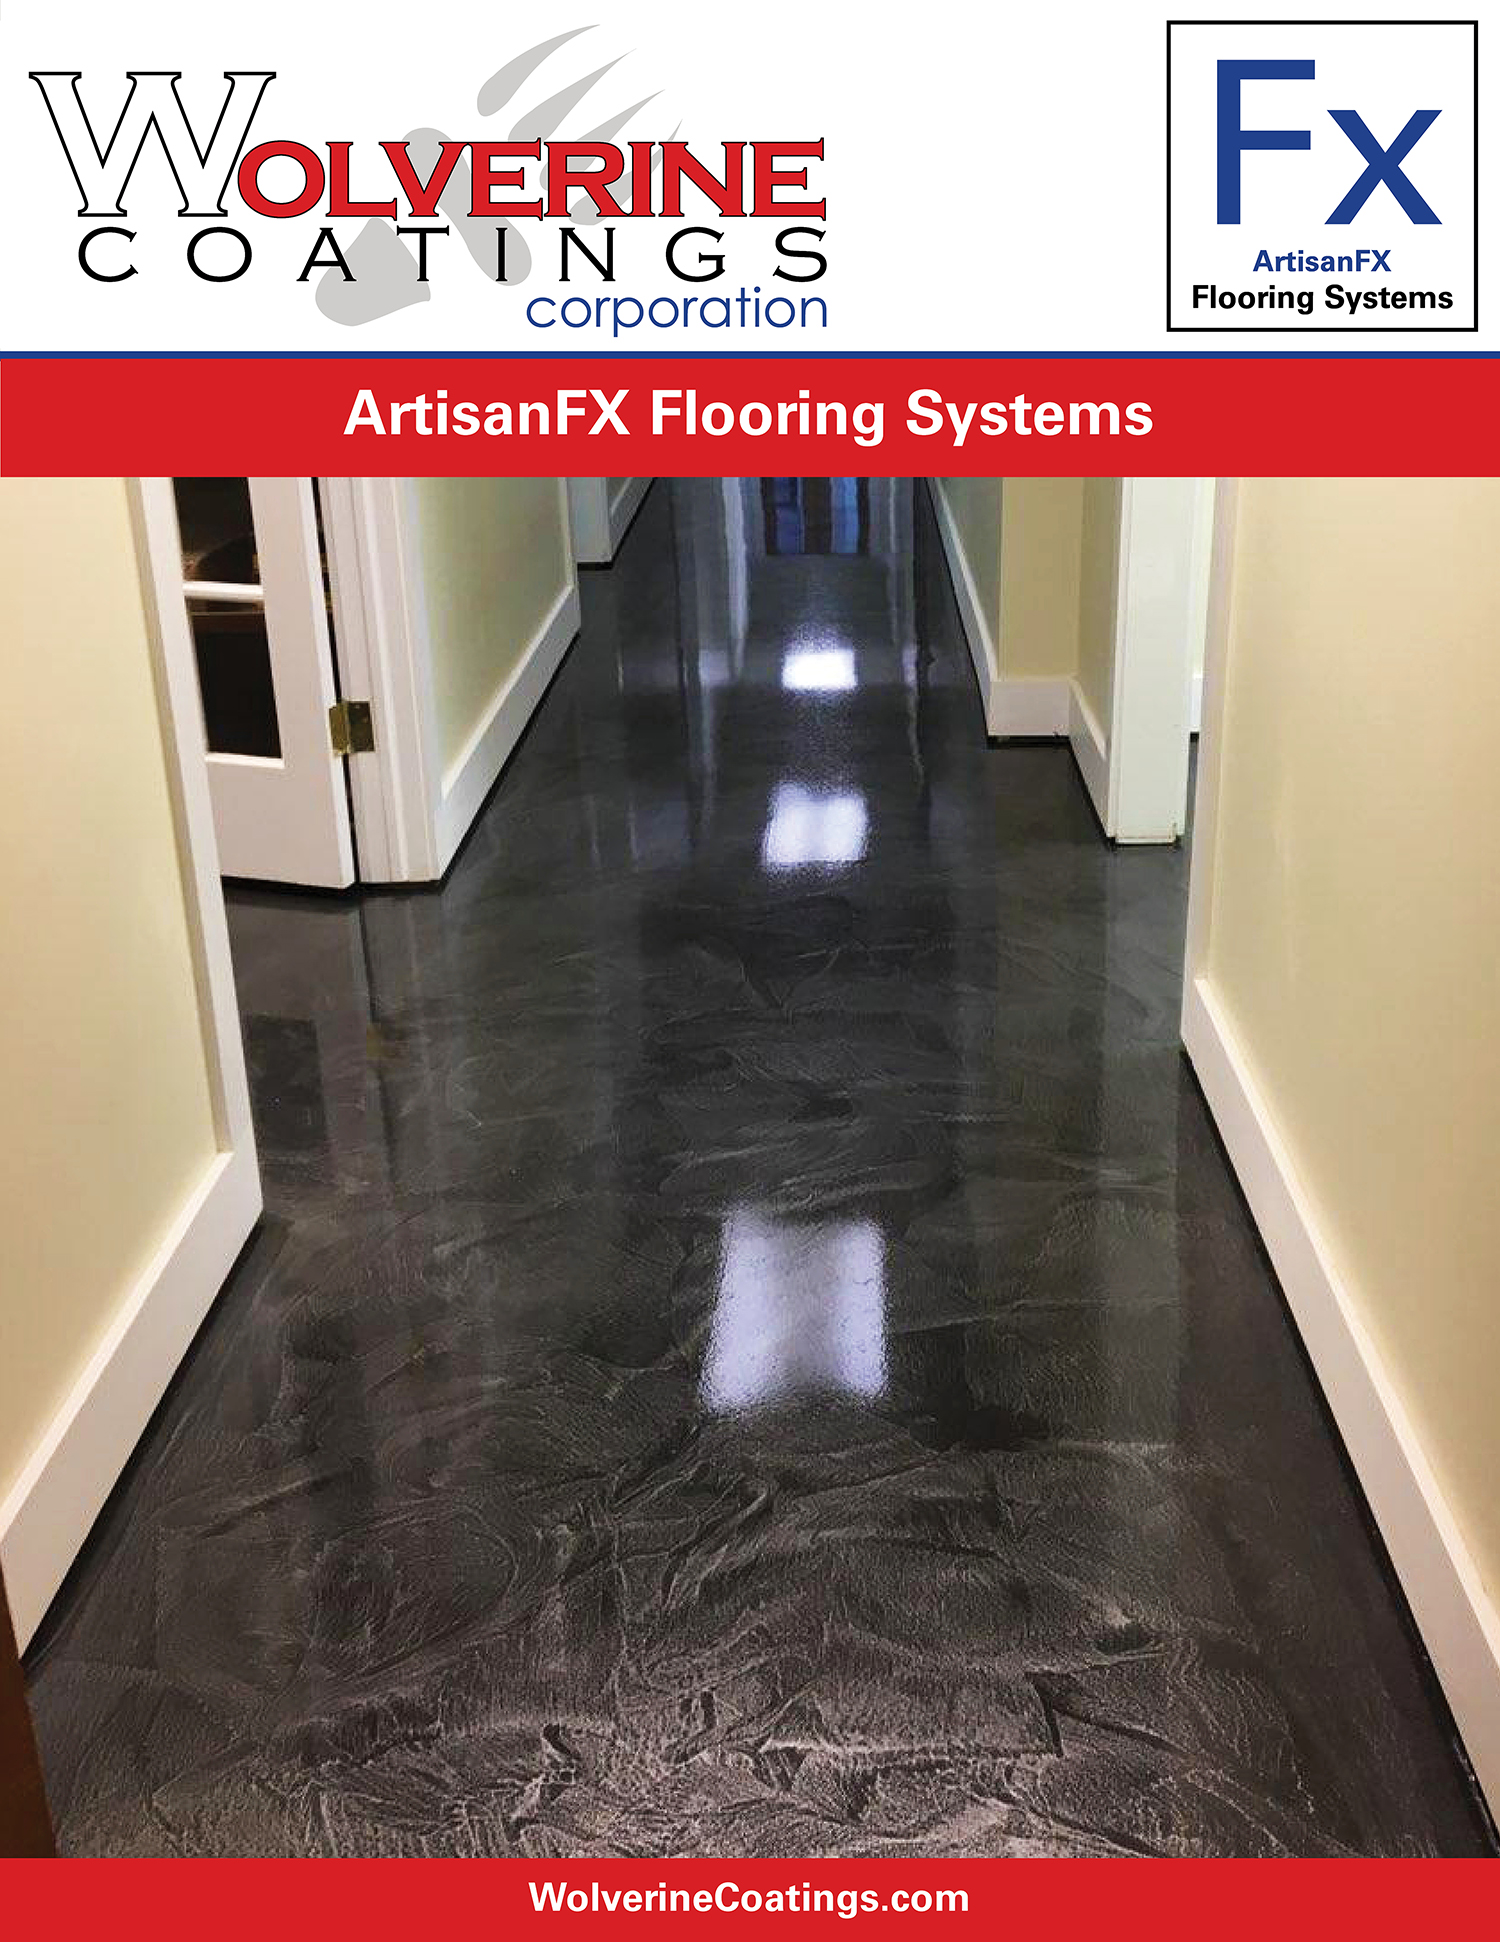 ArtisanFX Flooring Systems - General Product Brochures - Wolverine Coatings Corporation: Coatings Manufacturer, Spartanburg, SC